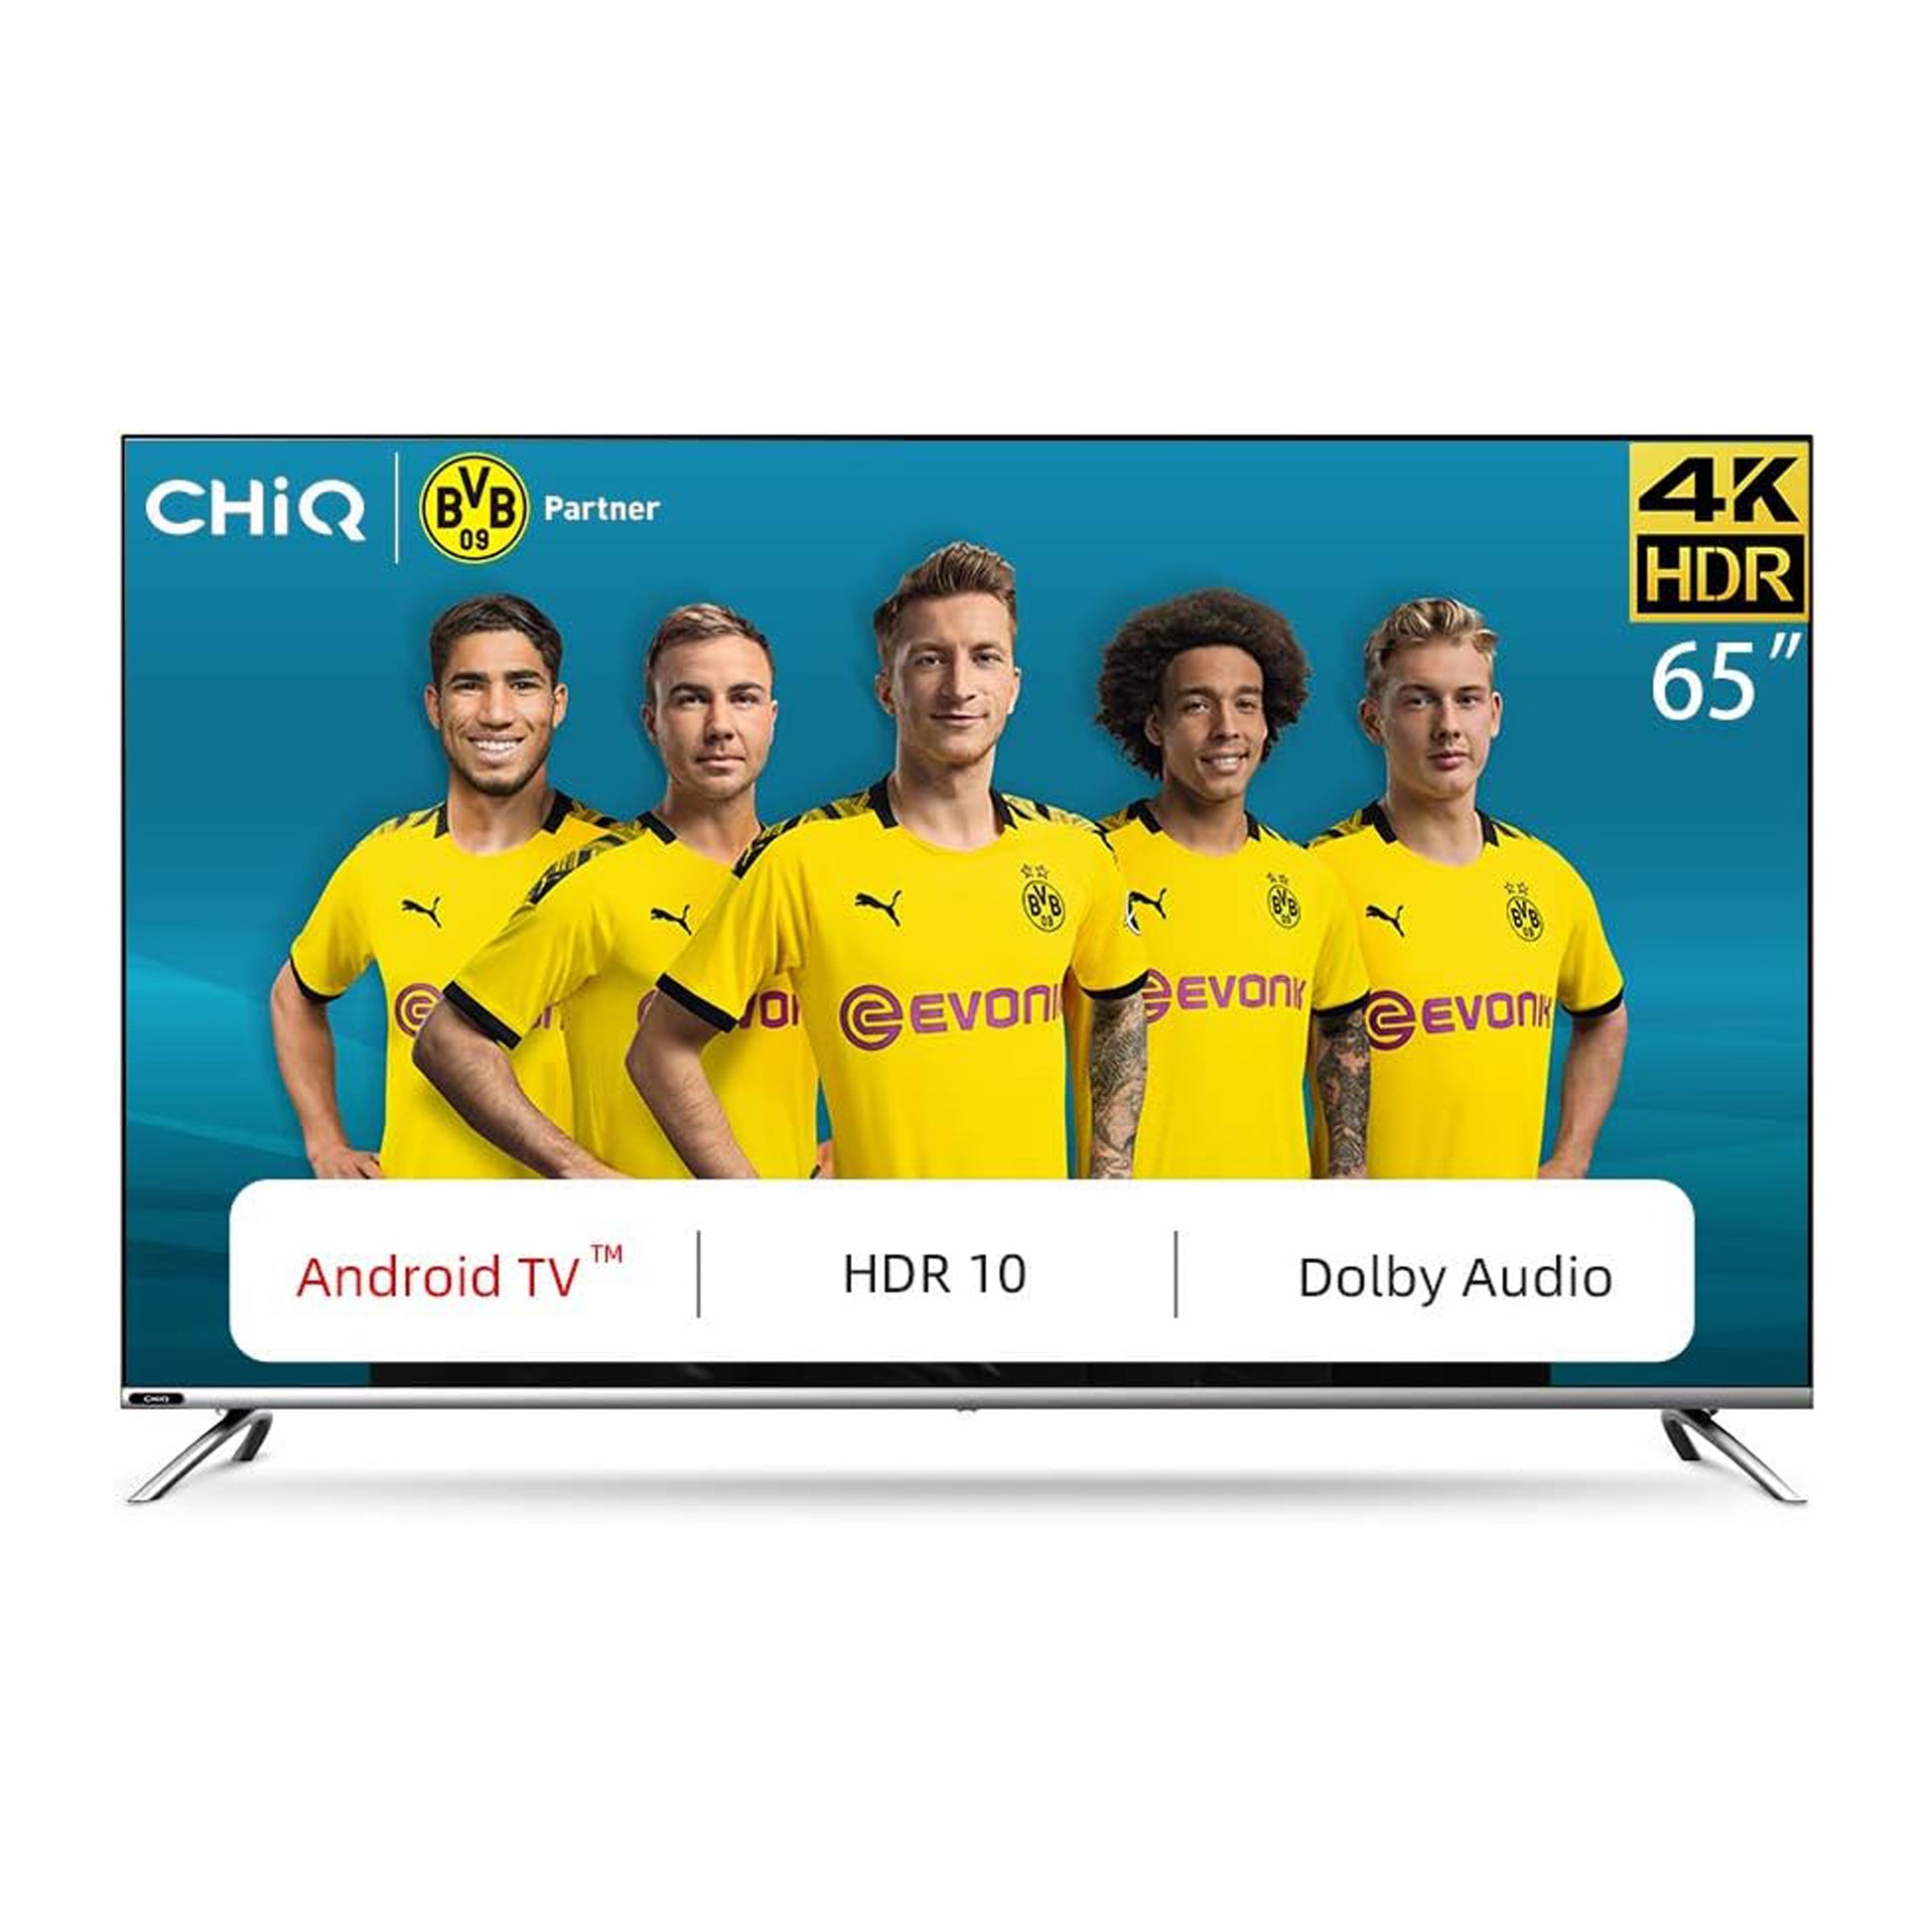 ChiQ 65" Android Smart TV - 4K, U65H7